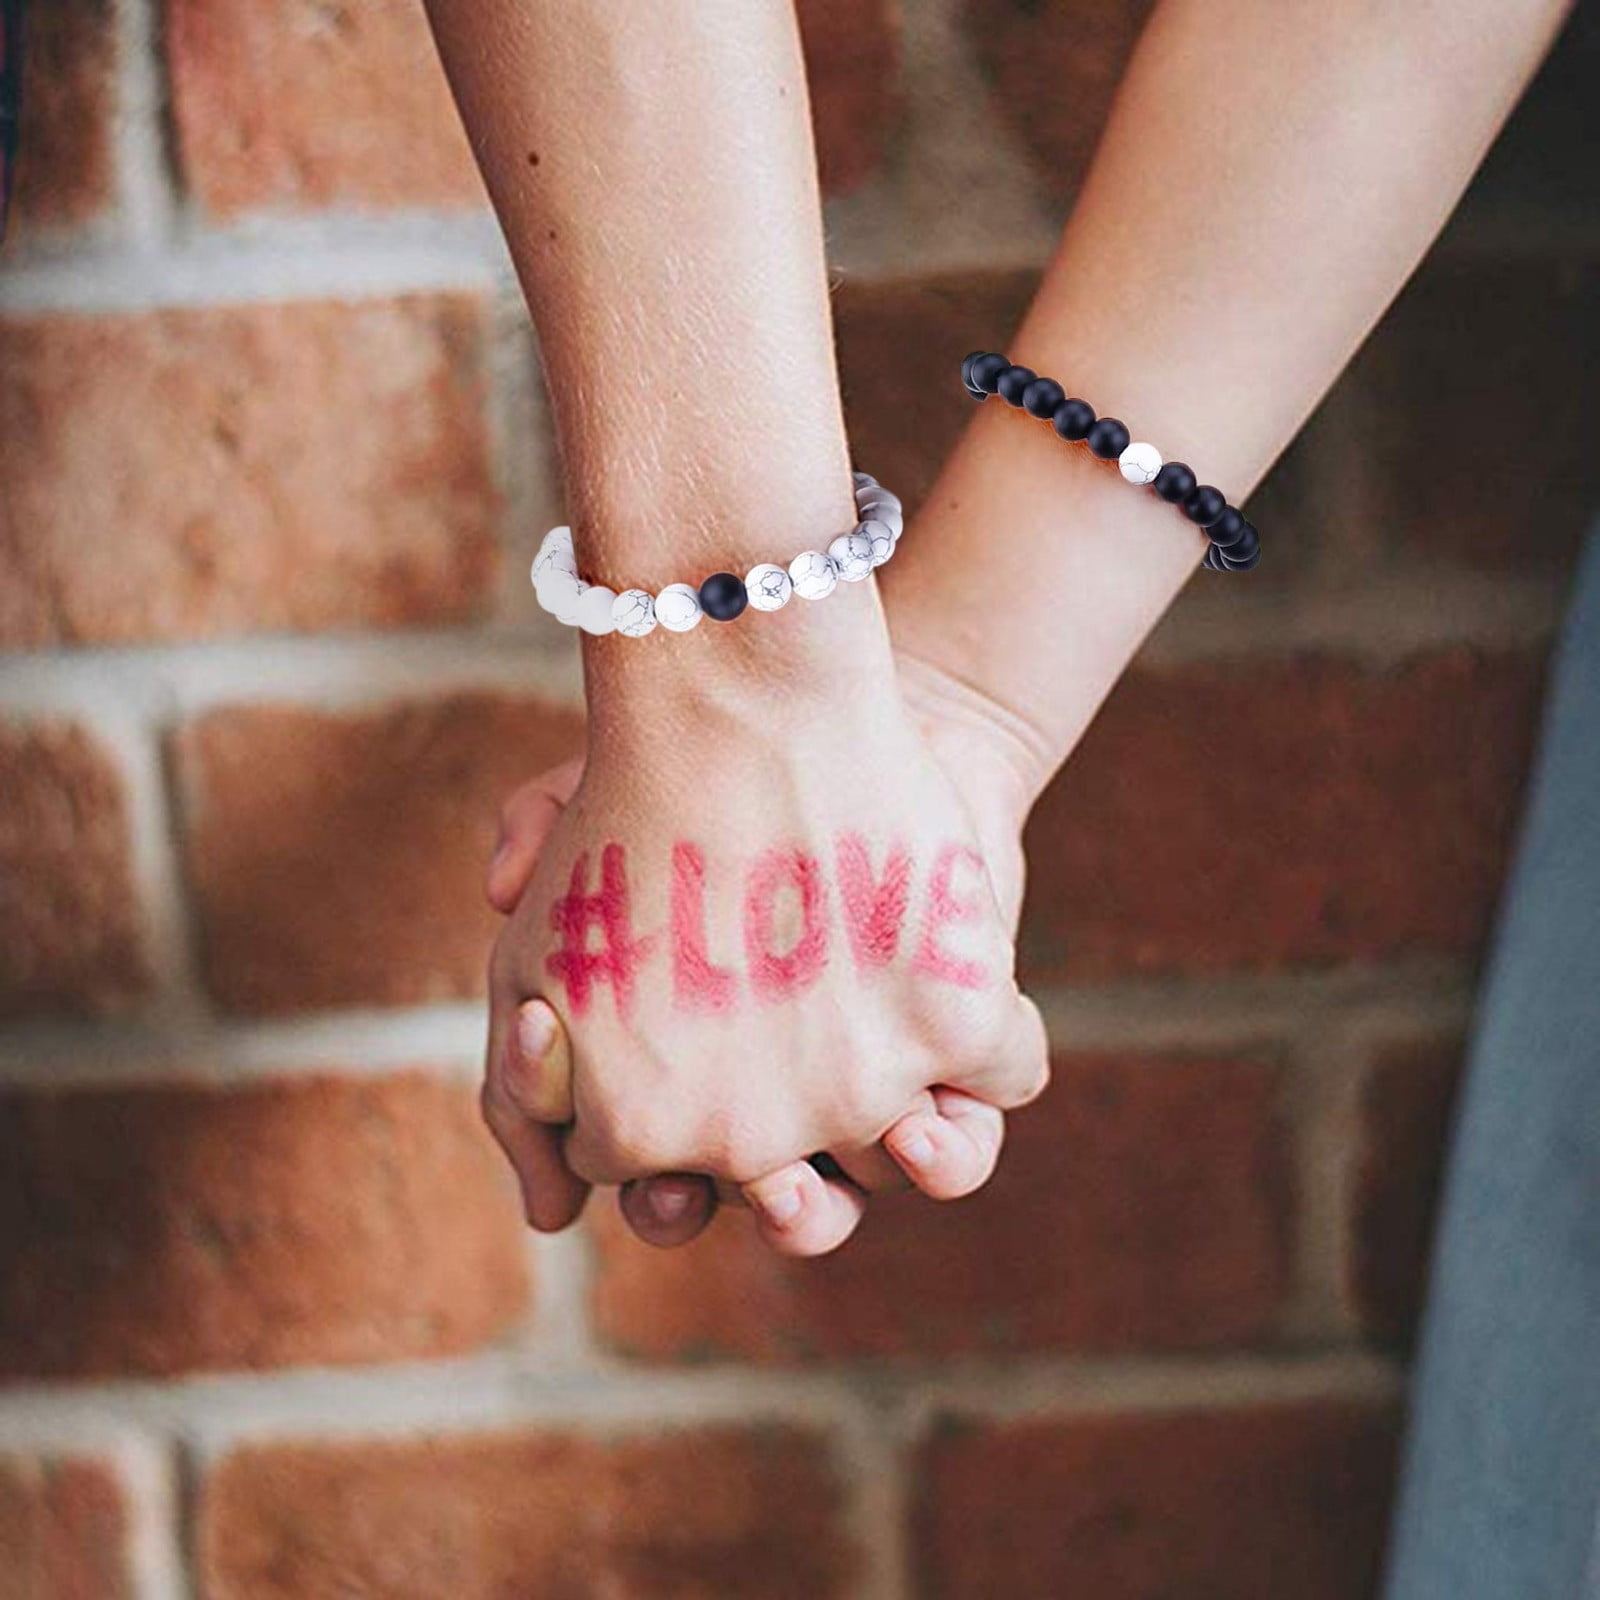 15 Long-Distance Relationship Bracelets Your Partner Will Love